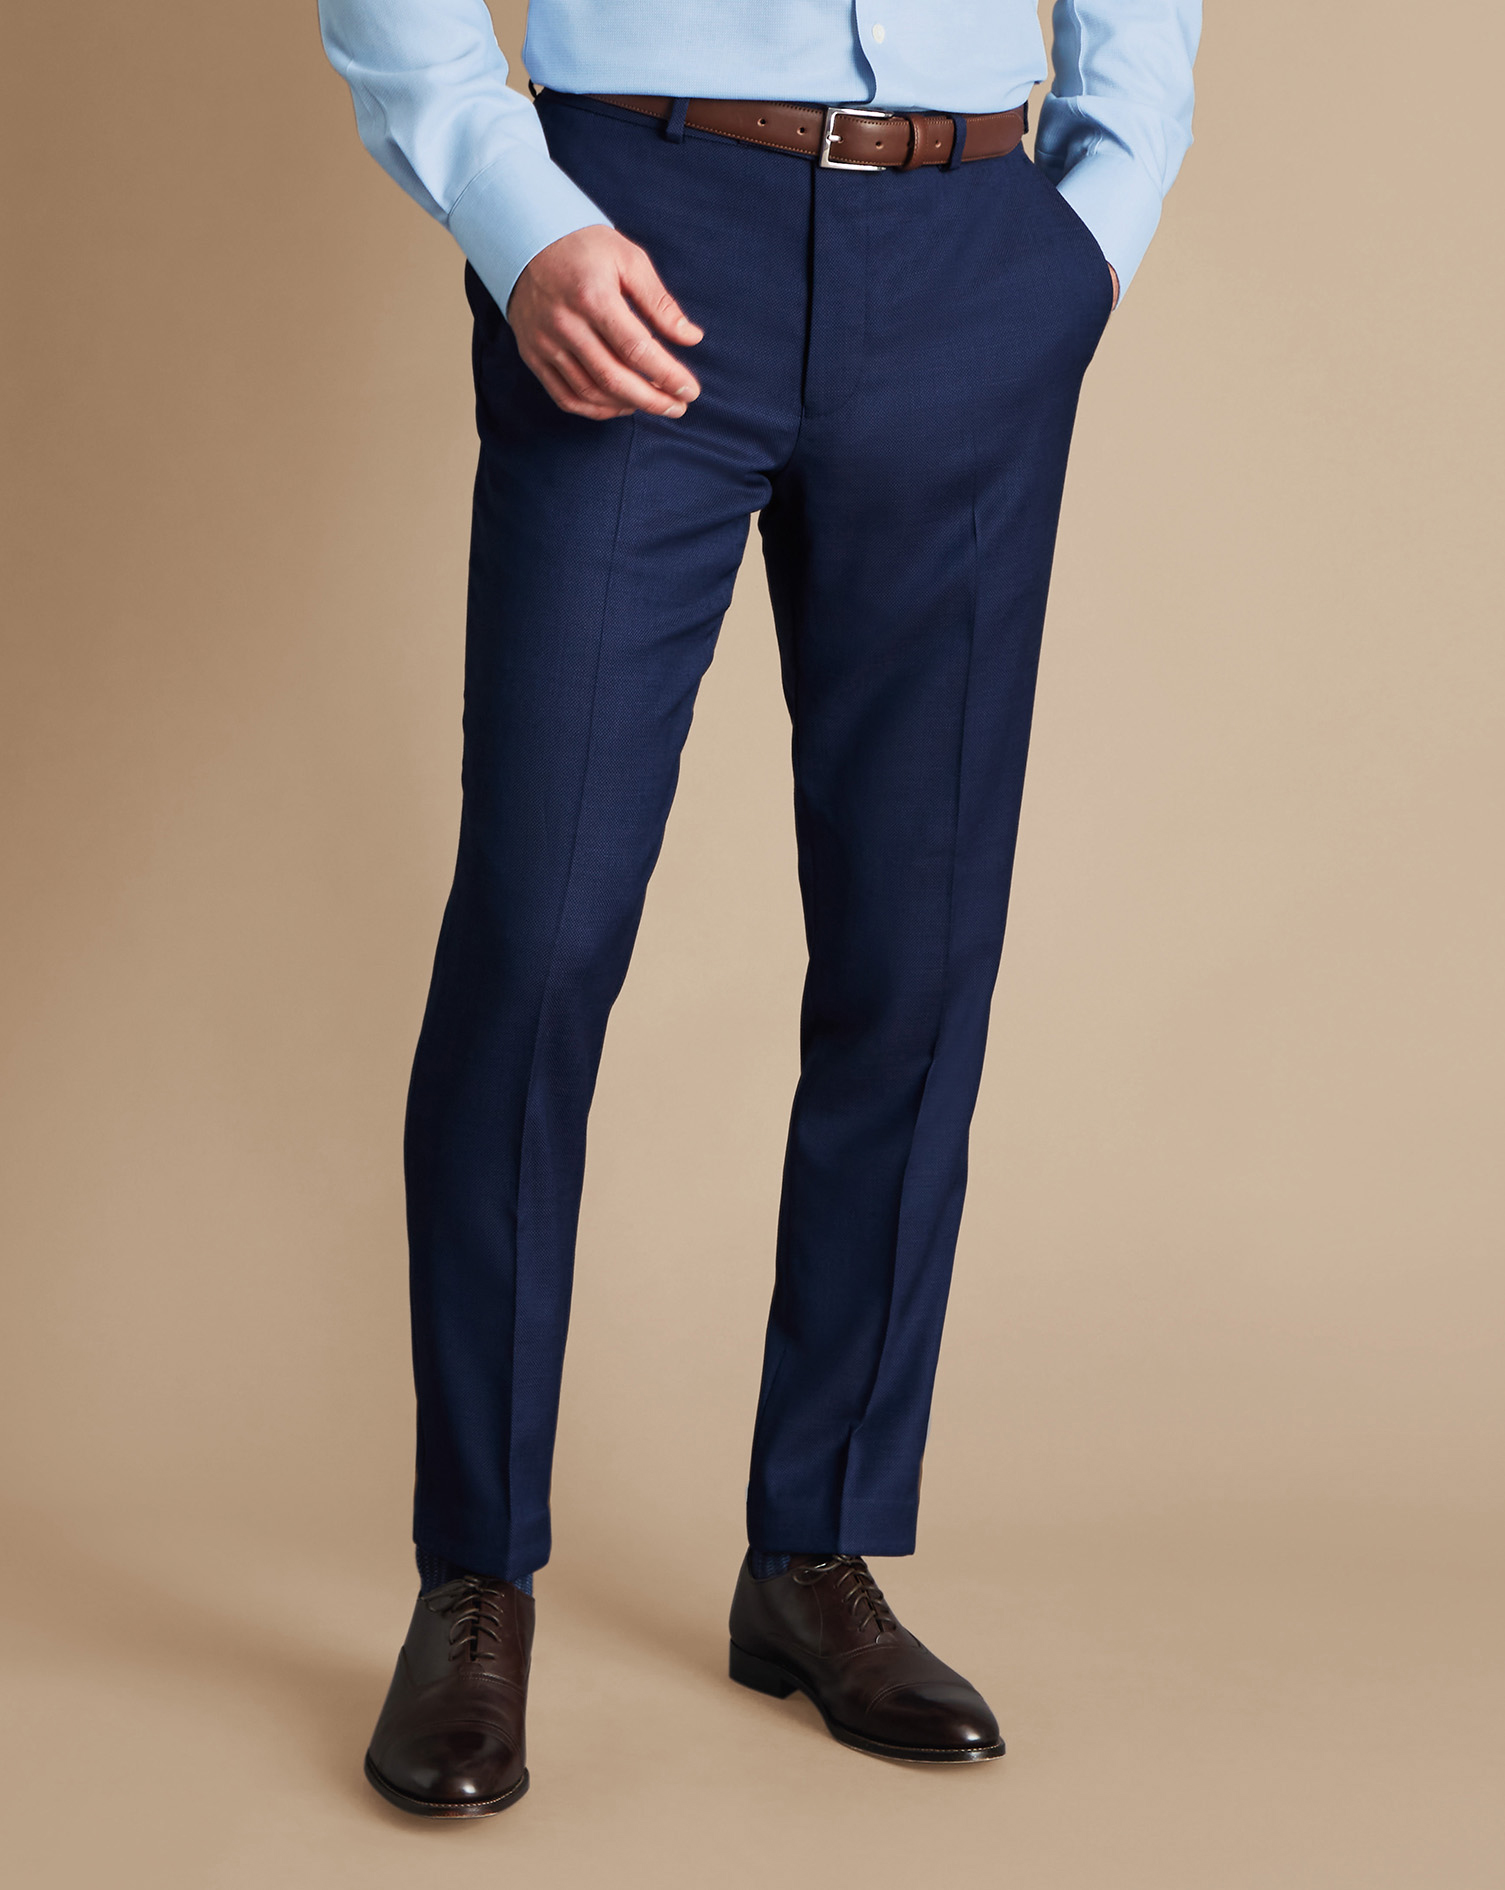 Men's Charles Tyrwhitt Birdseye Ultimate Travel Suit Trousers - Indigo Blue Size 30/38 Wool
